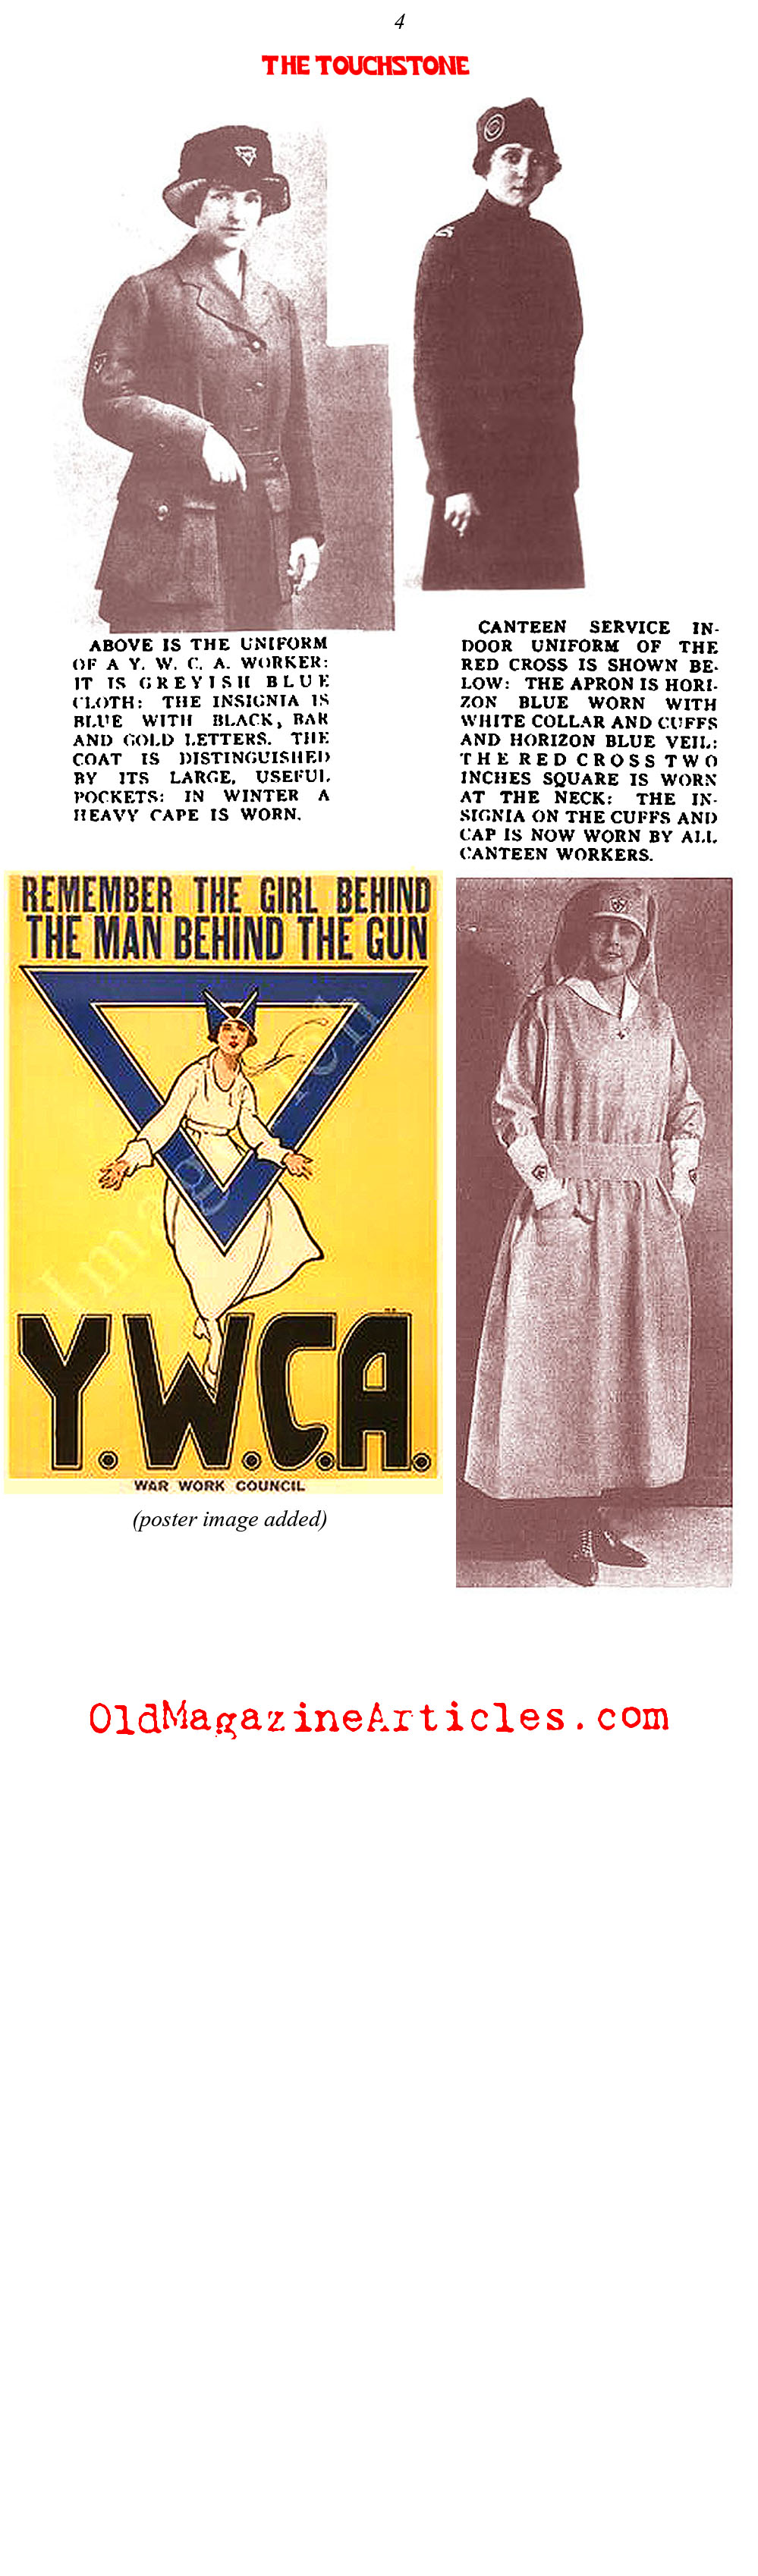 The Uniforms of Women War Workers (Touchstone Magazine, 1918)